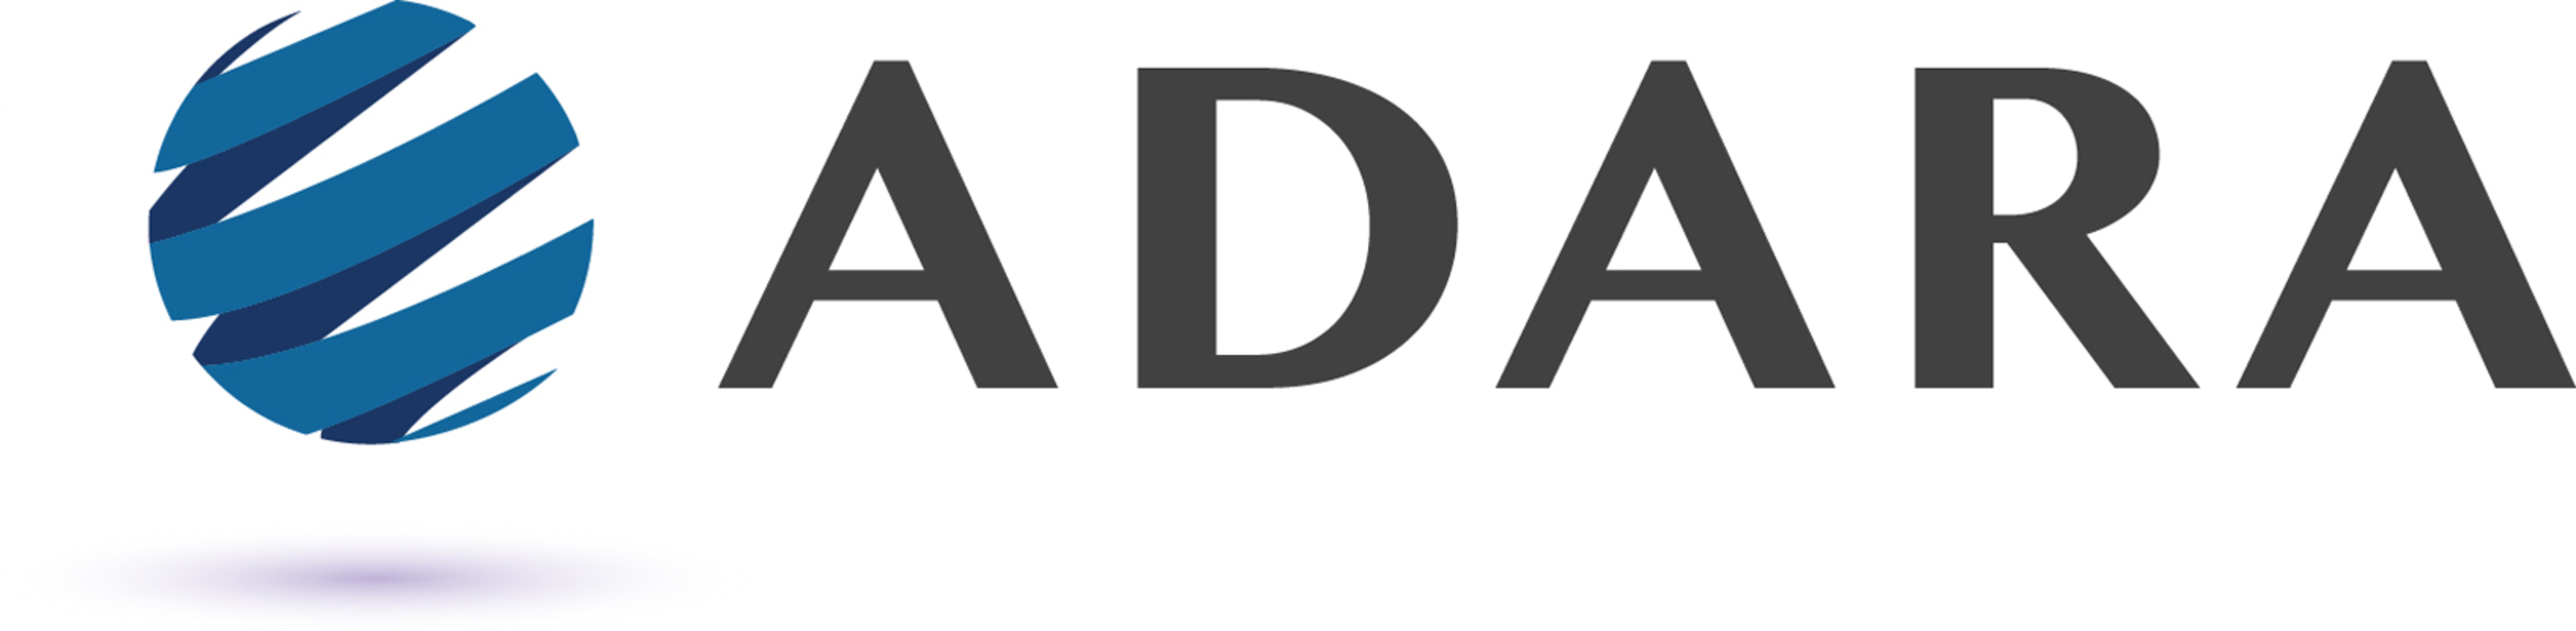 ADARA Networks logo.